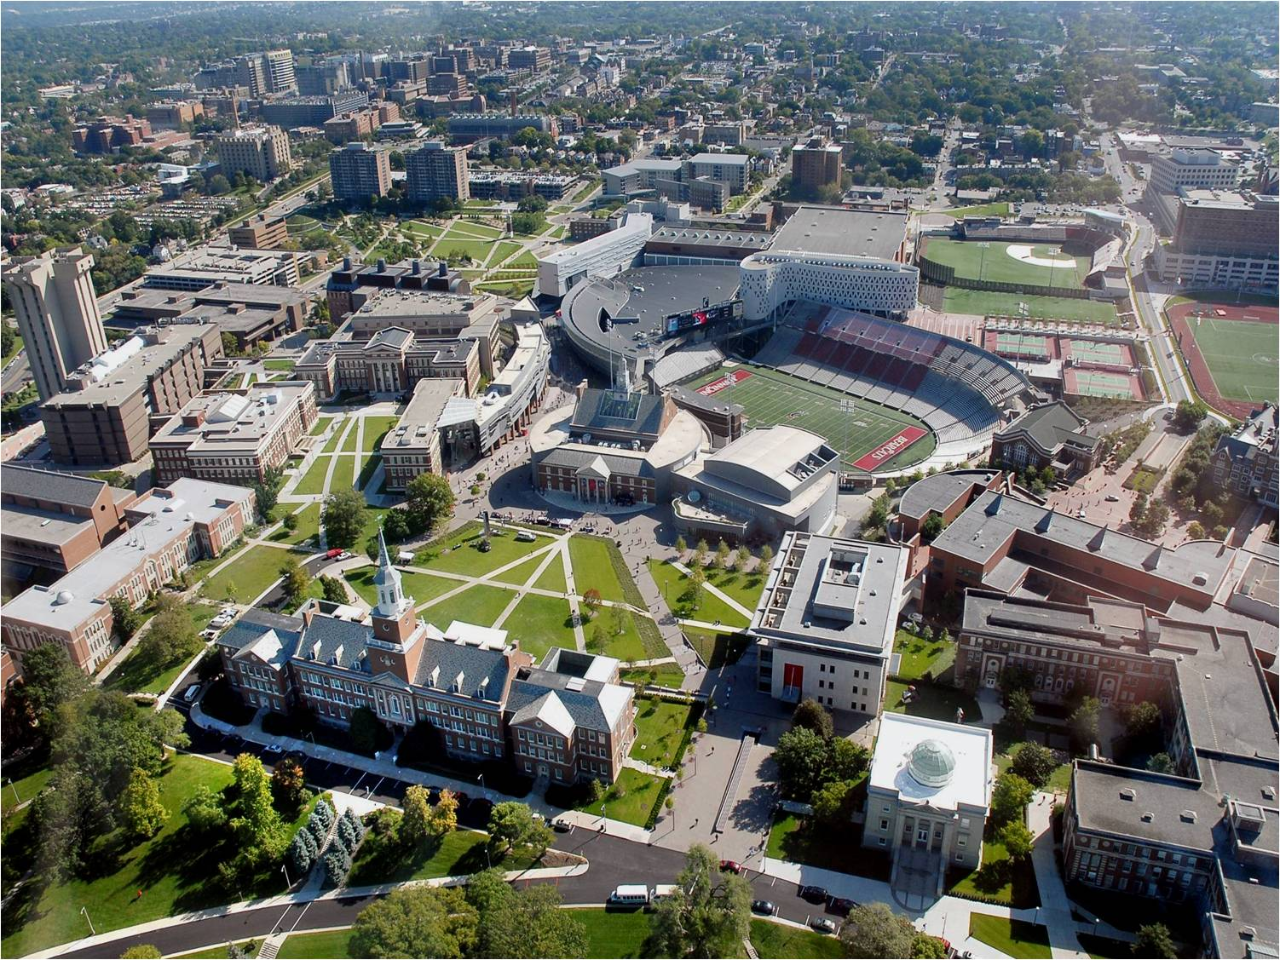 The University of Cincinnati's uptown campus in Clifton.